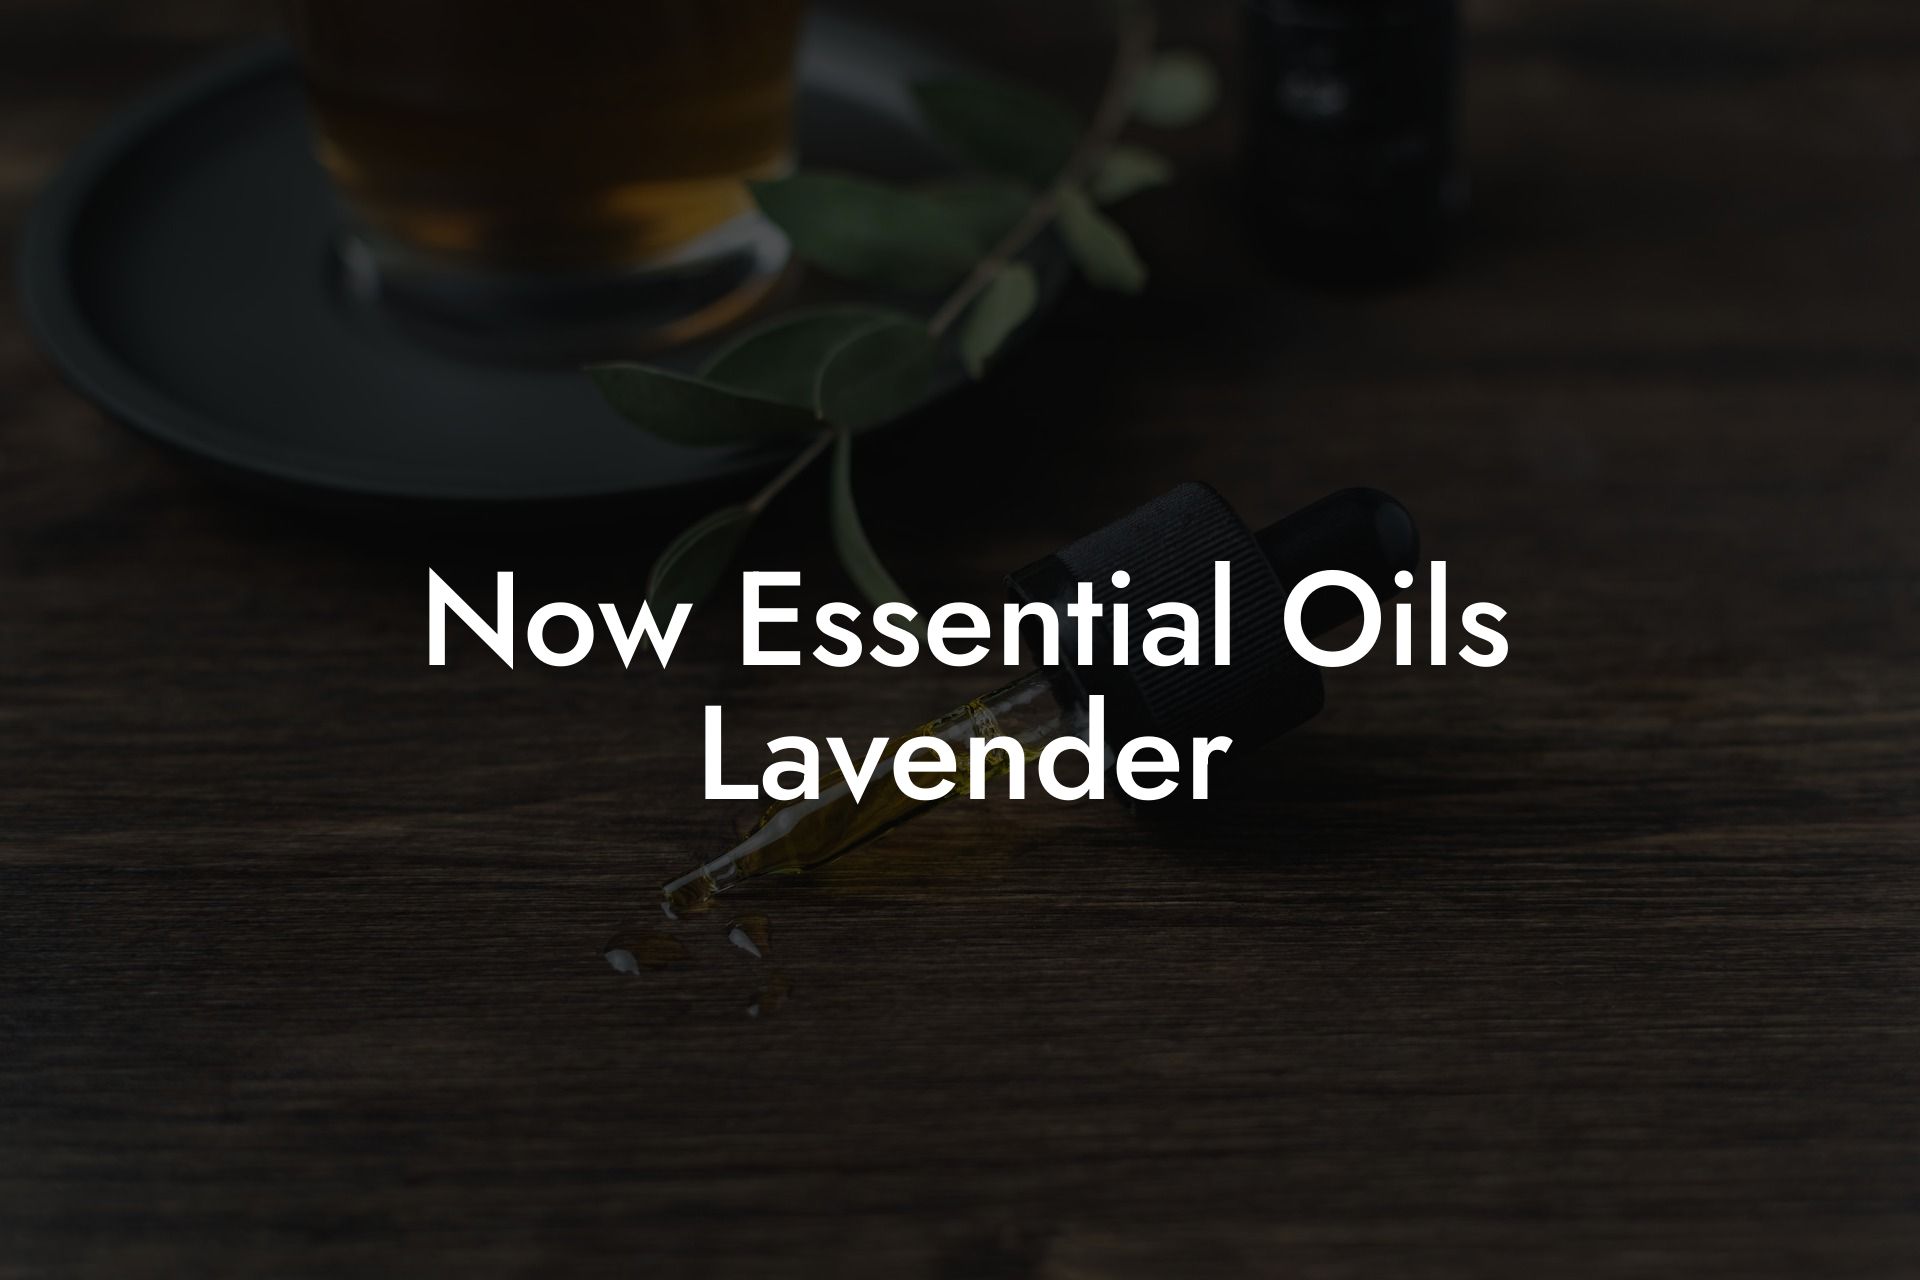 Now Essential Oils Lavender